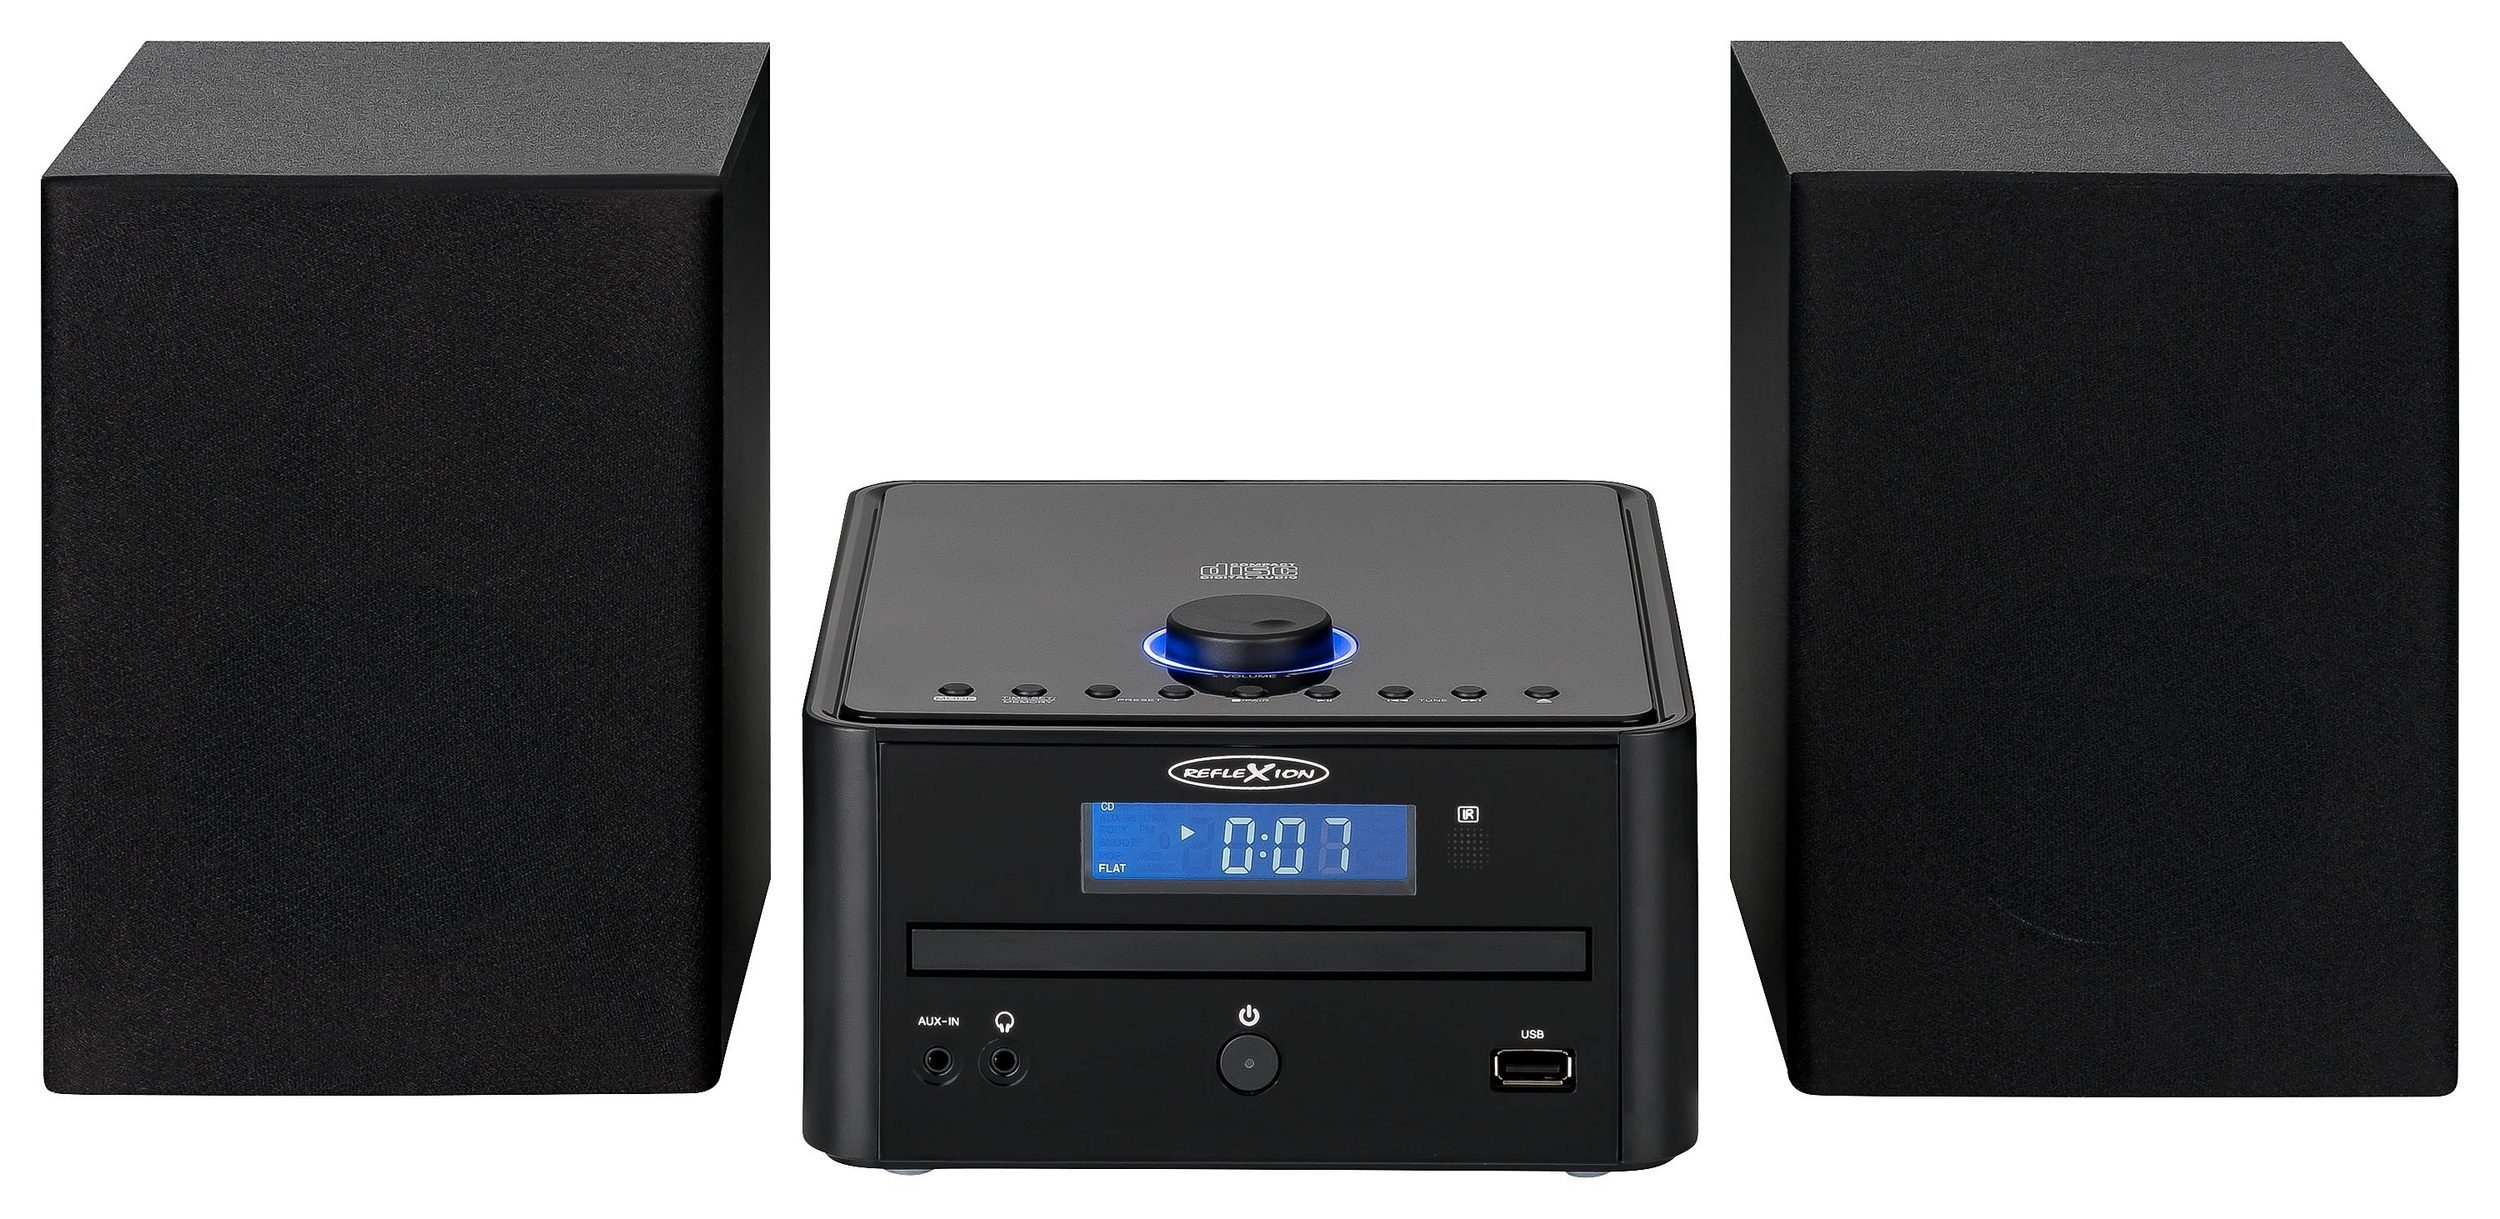 Reflexion HIF79FM Microanlage (UKW, USB, MP3/CD, und Bluetooth, 32,00 W, Alarm, Uhr, Sleep-Funktion)